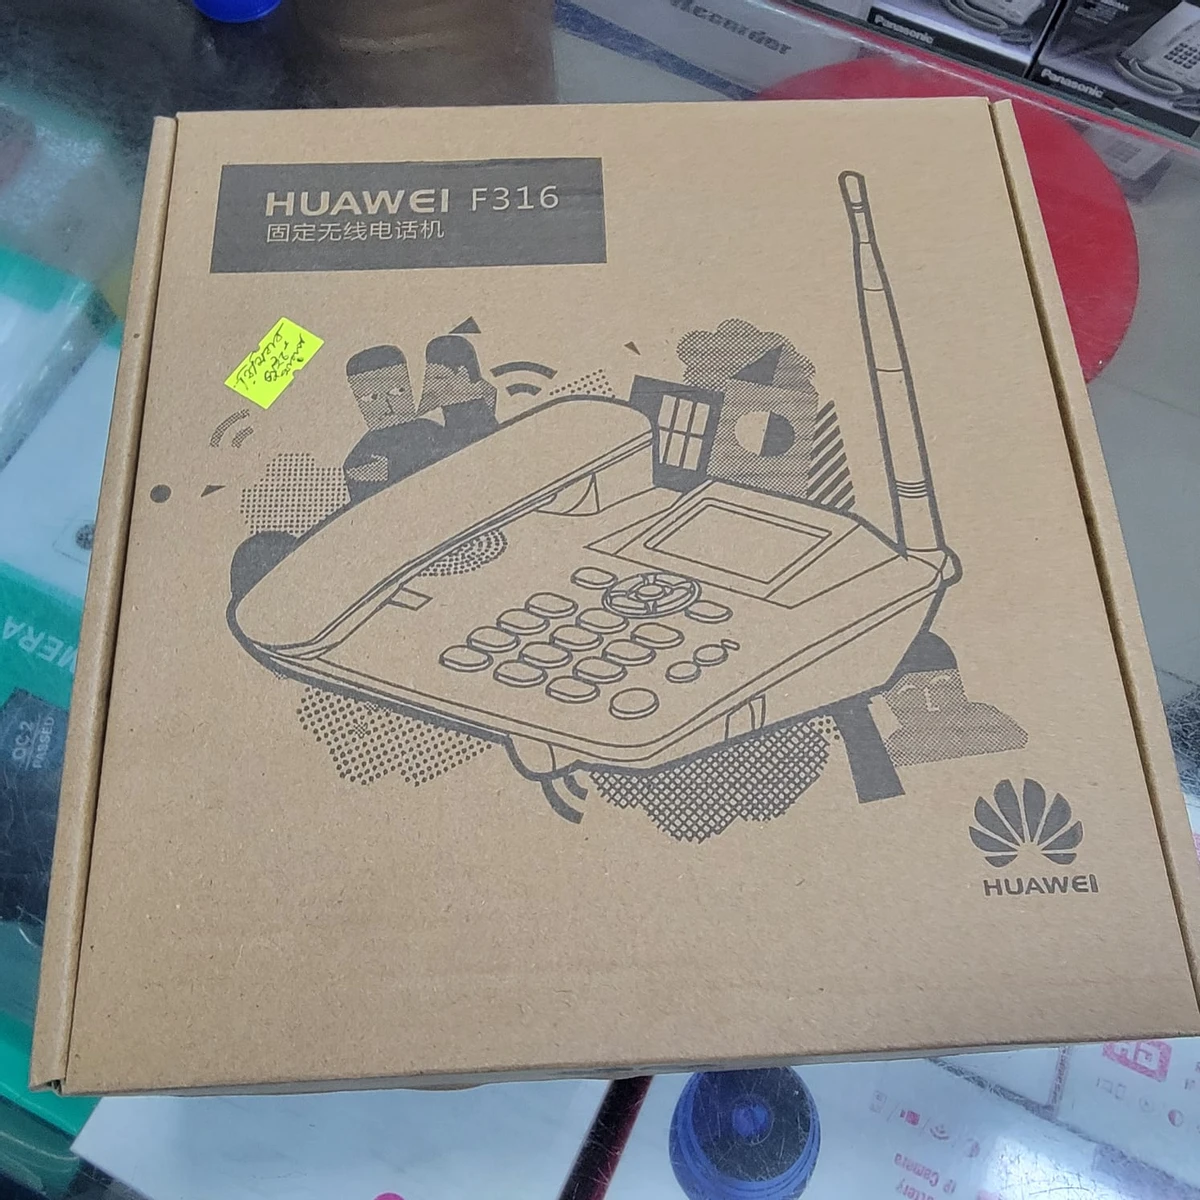 Huawei F316 wireless telephone